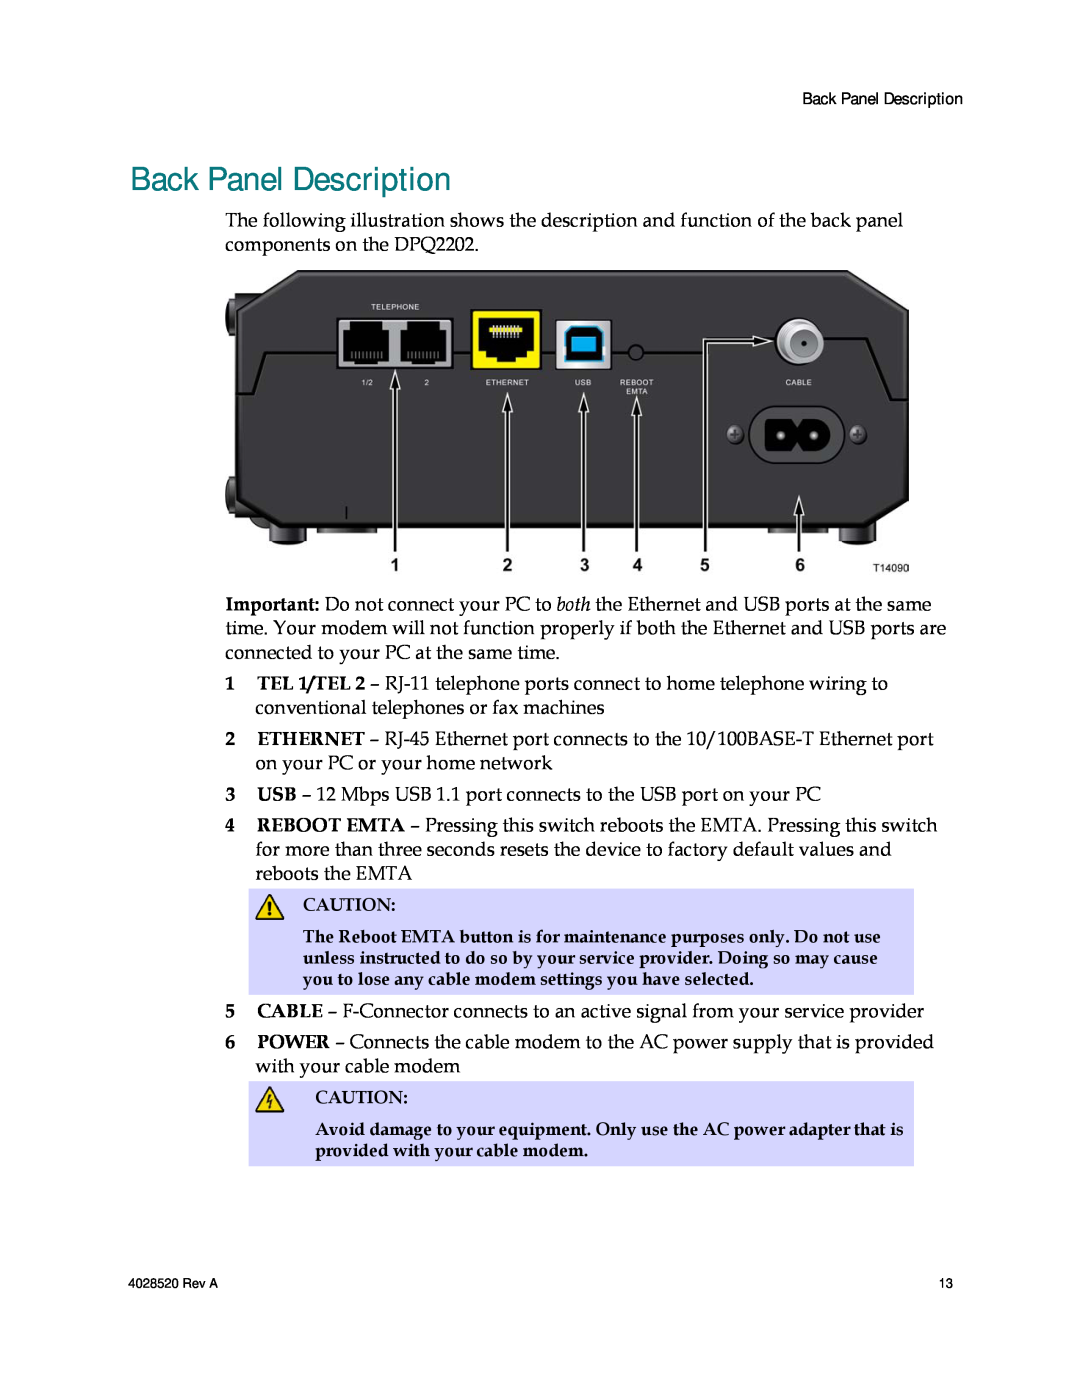 Cisco Systems DPQ2202 important safety instructions Back Panel Description 